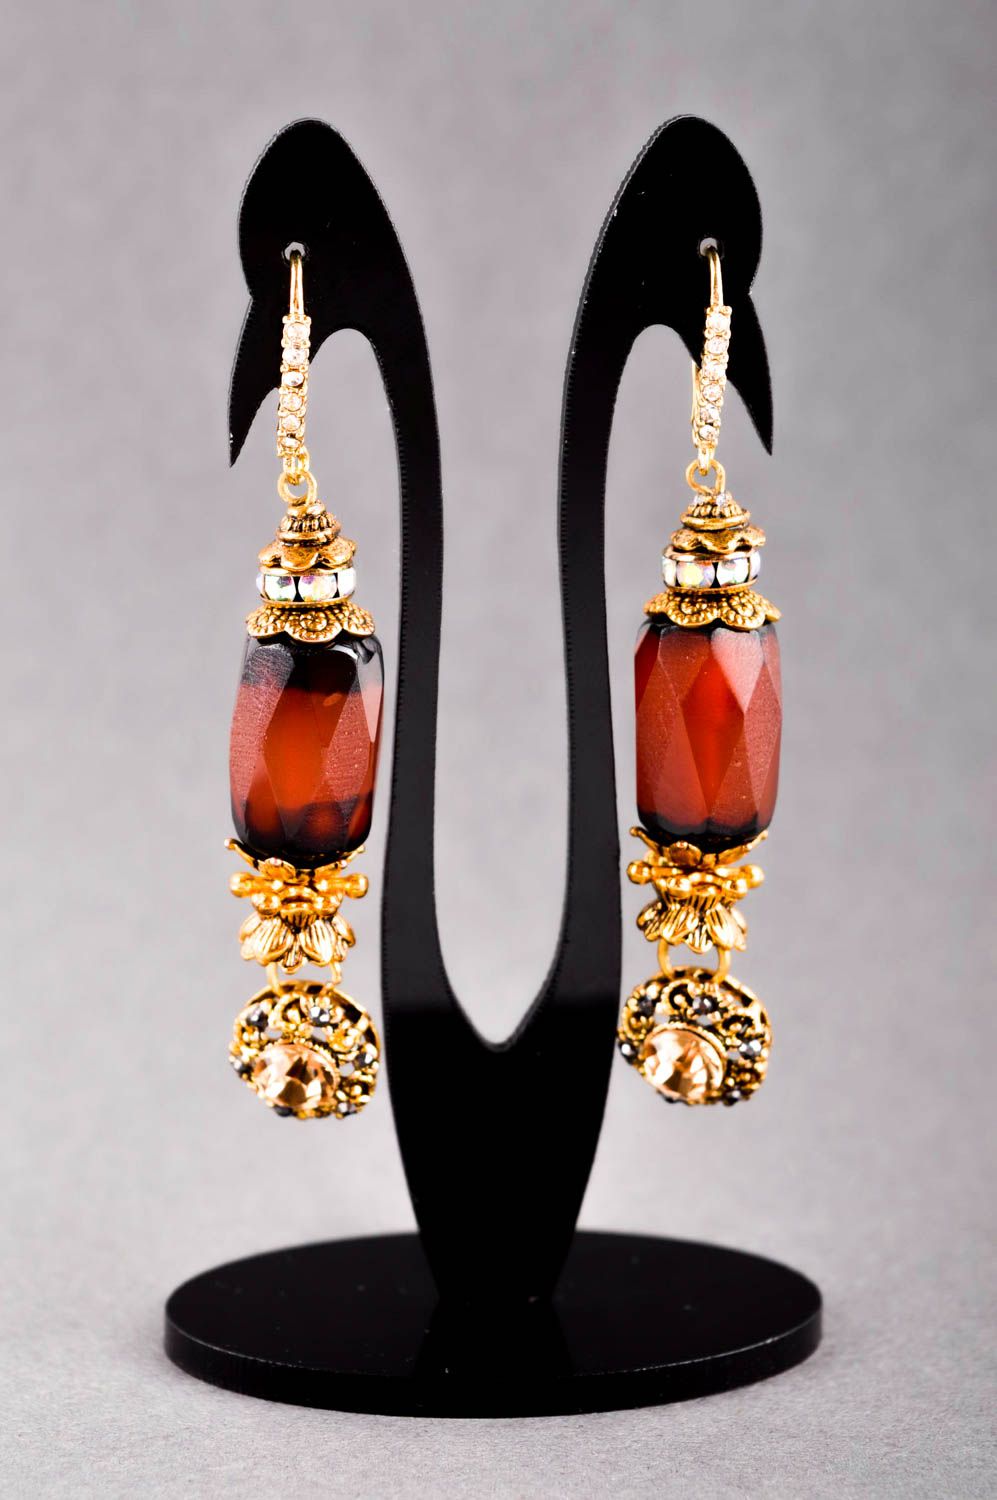 Handmade earrings designer earrings with stones unusual jewelry gift for her photo 1